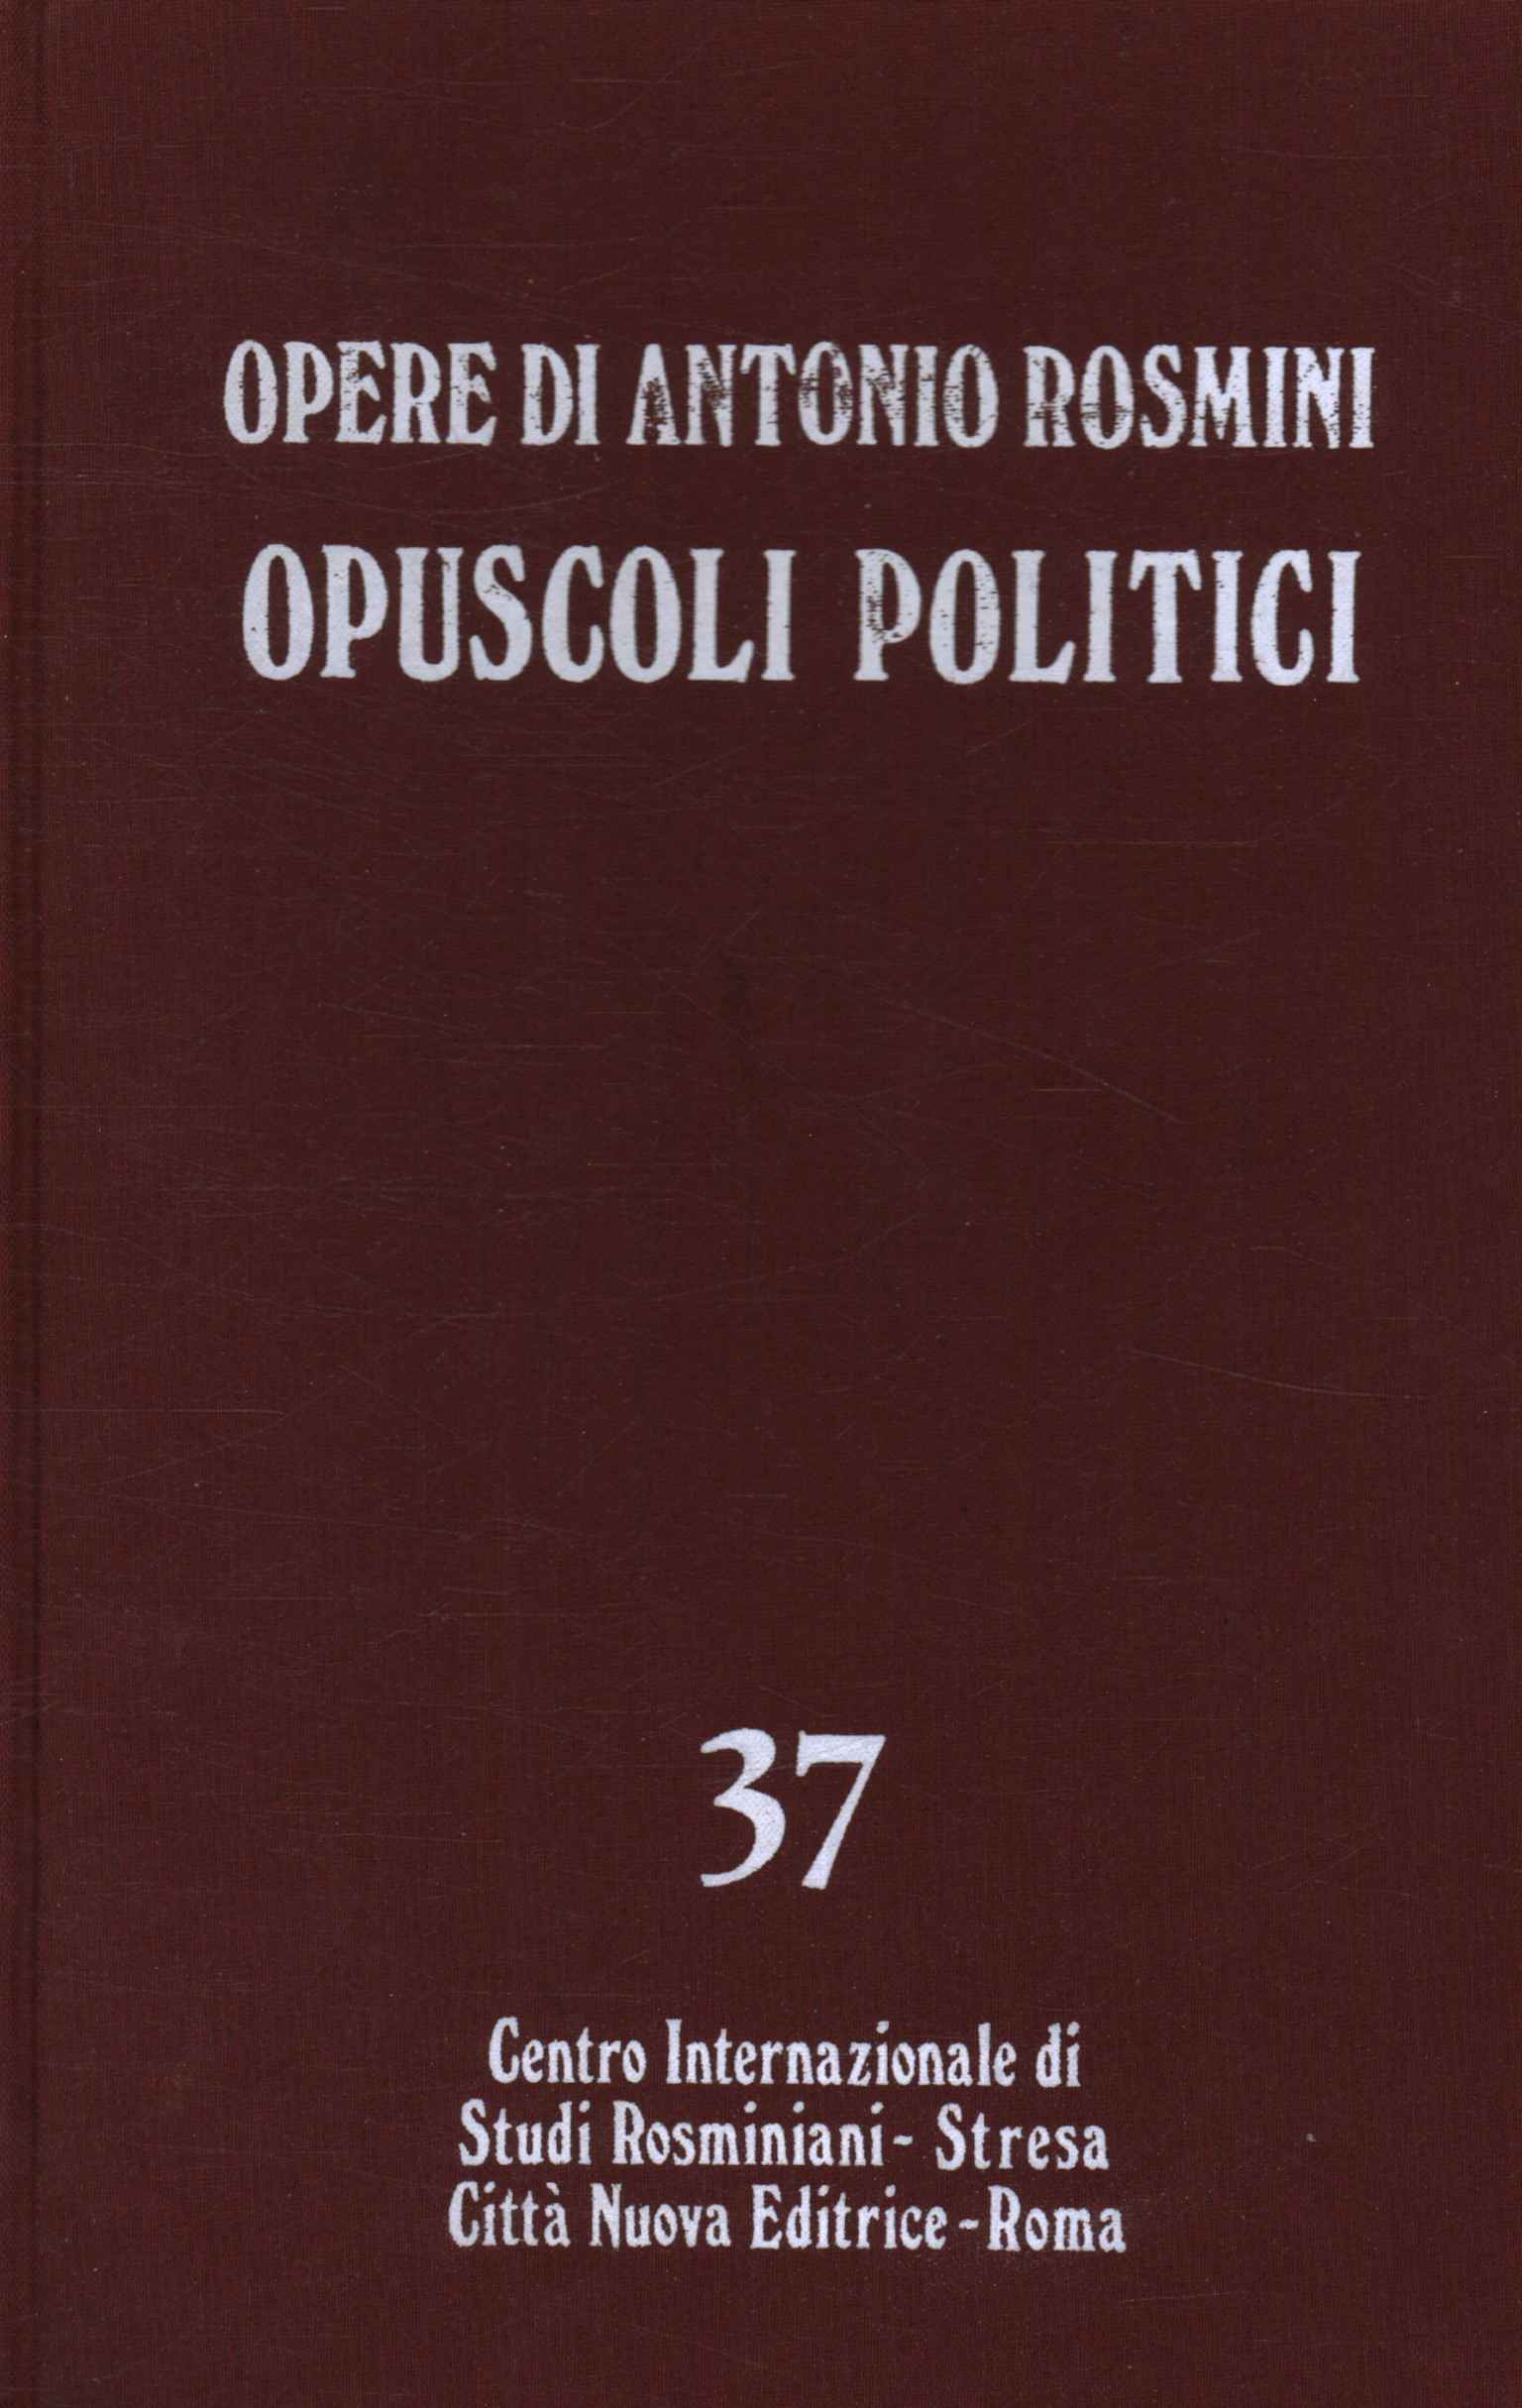 Works by Antonio Rosmini. Political brochures